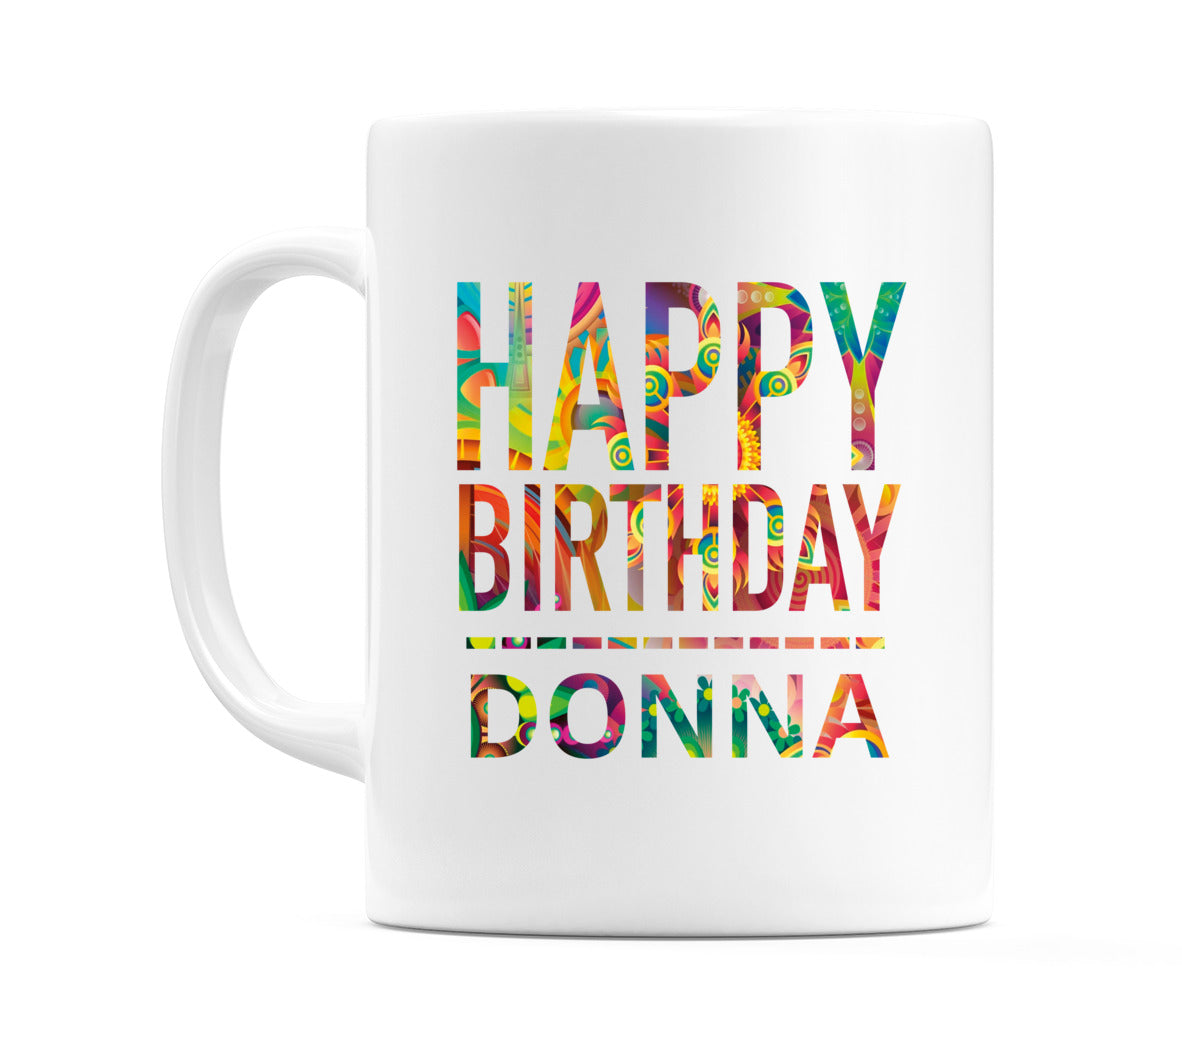 Happy Birthday Donna (Tie Dye Effect) Mug Cup by WeDoMugs